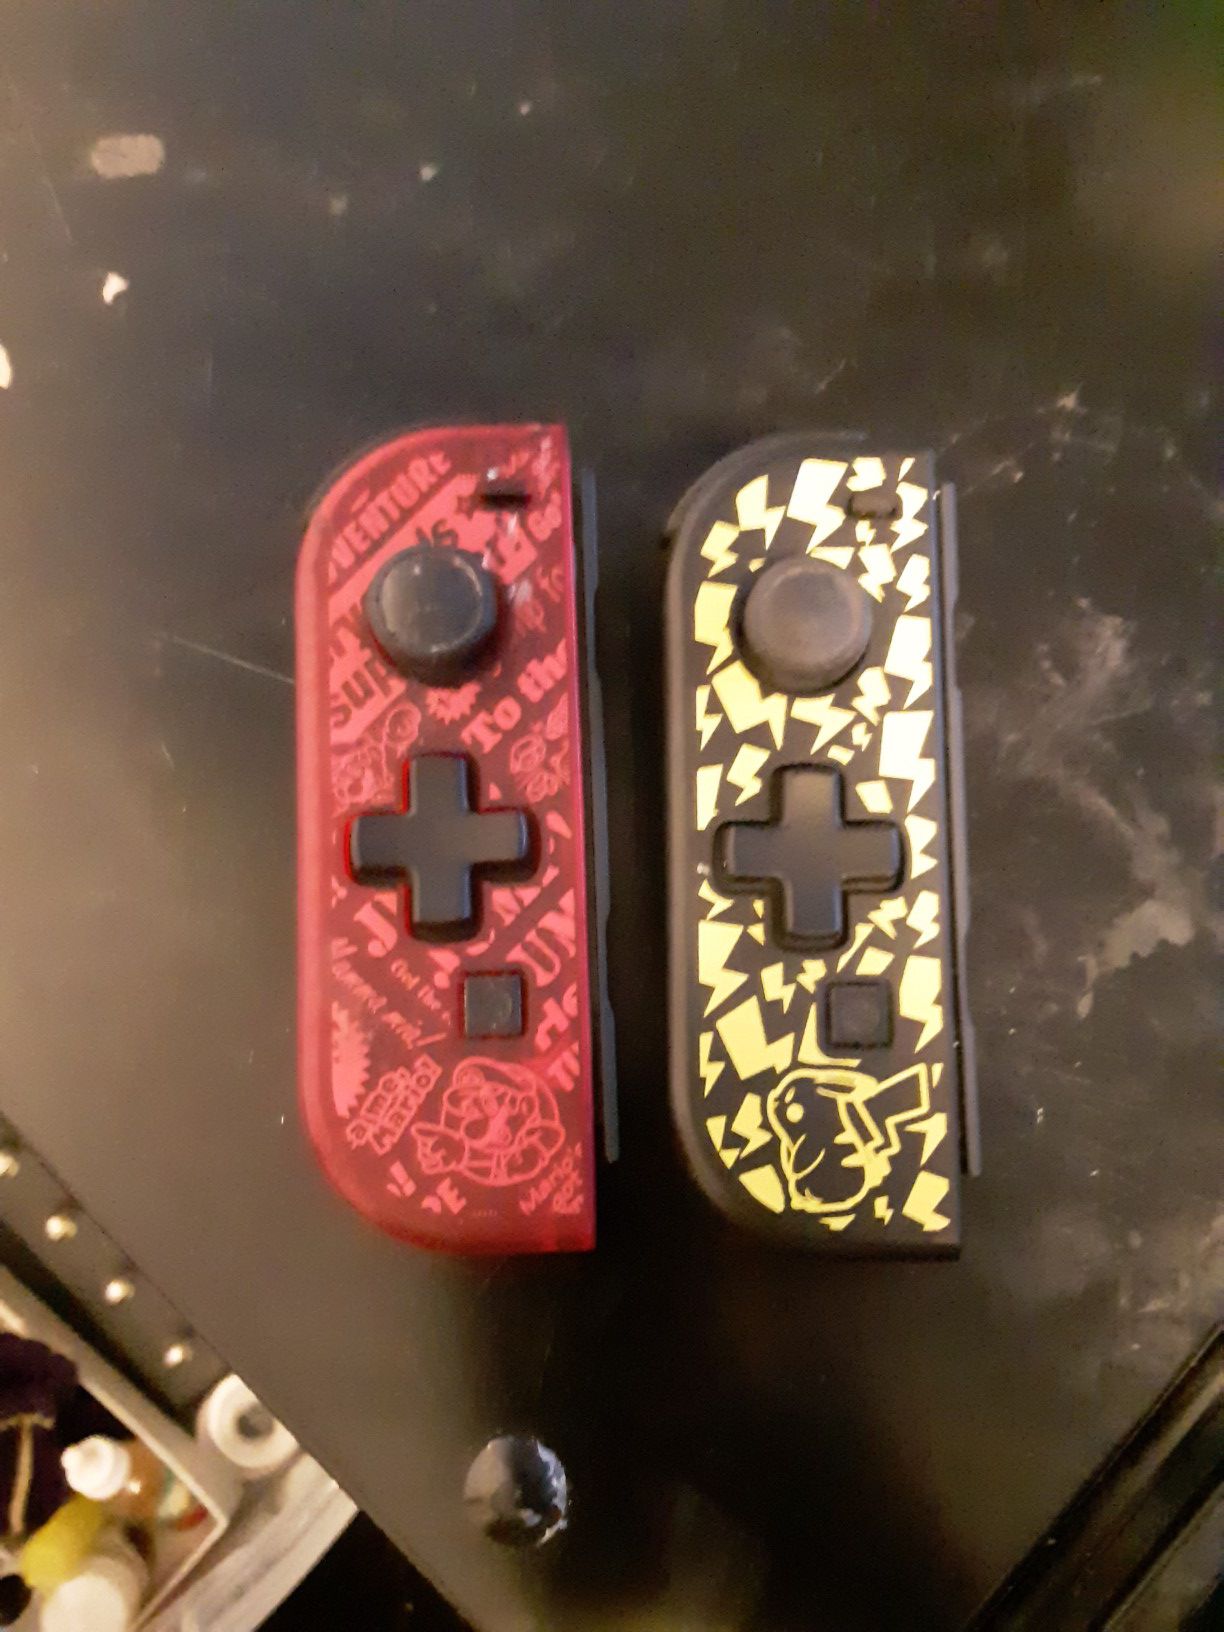 2 Left Side Nintendo Switch Joycons